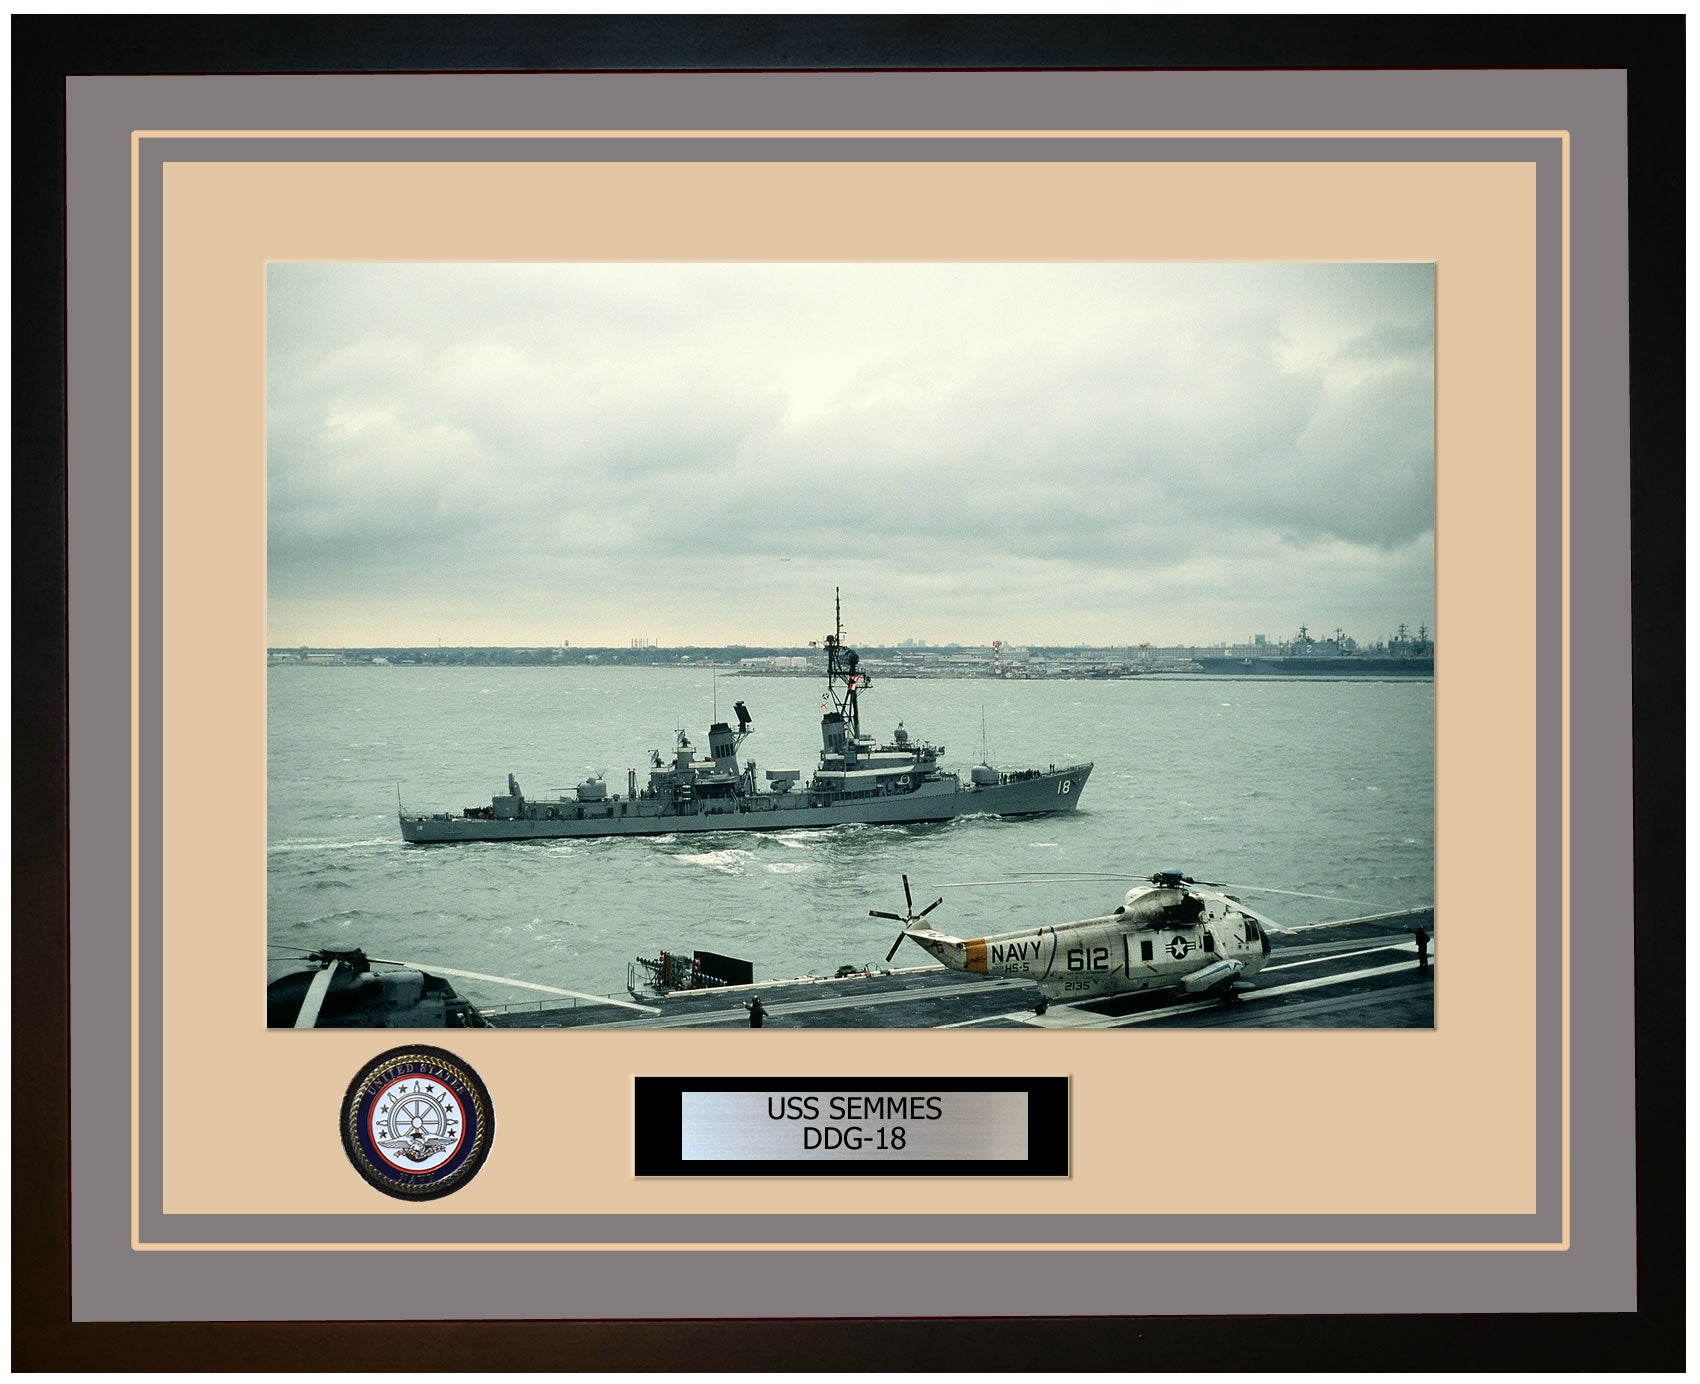 USS SEMMES DDG-18 Framed Navy Ship Photo Grey